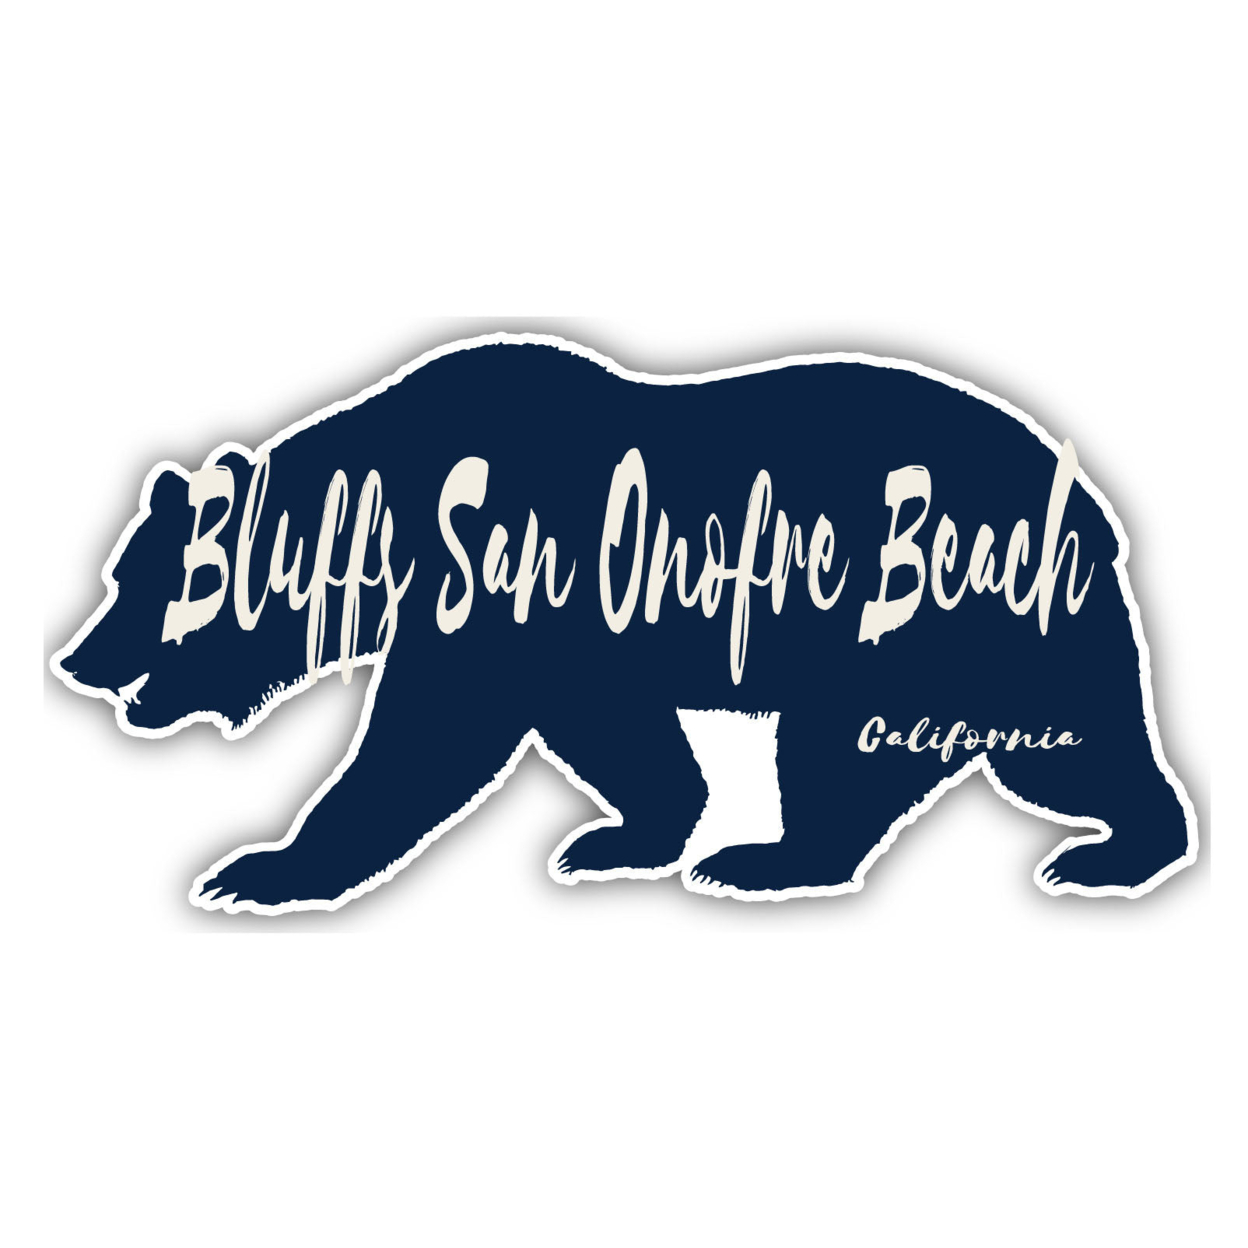 Bluffs San Onofre Beach California Souvenir Decorative Stickers (Choose Theme And Size) - Single Unit, 12-Inch, Bear